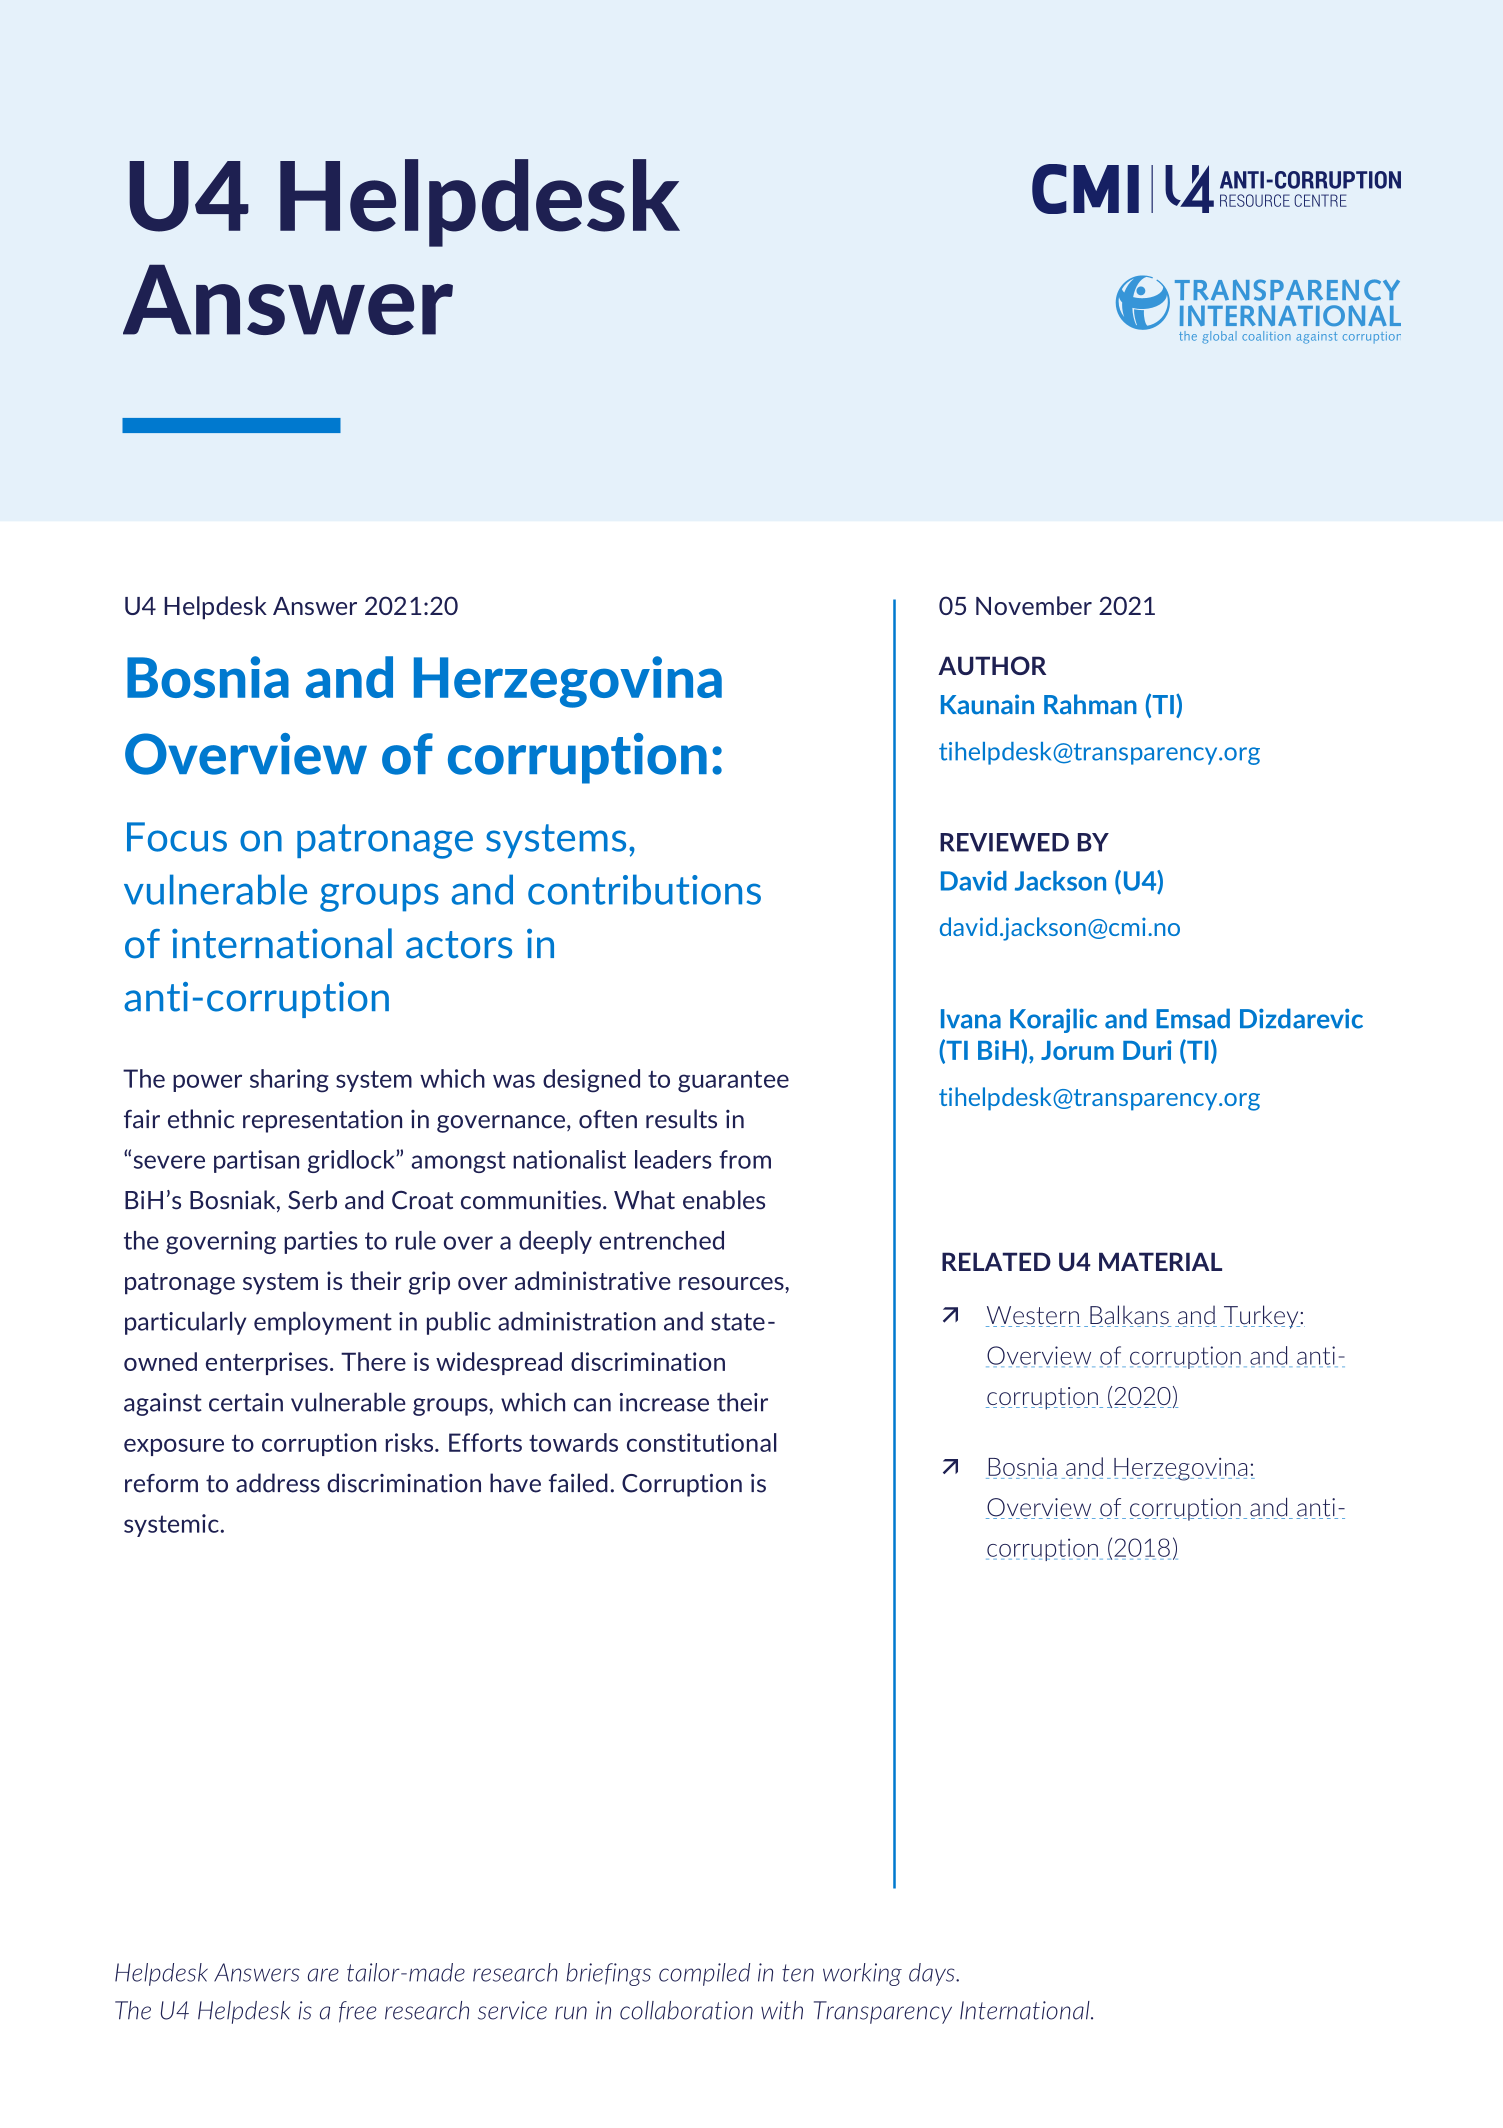 Bosnia and Herzegovina: Overview of corruption